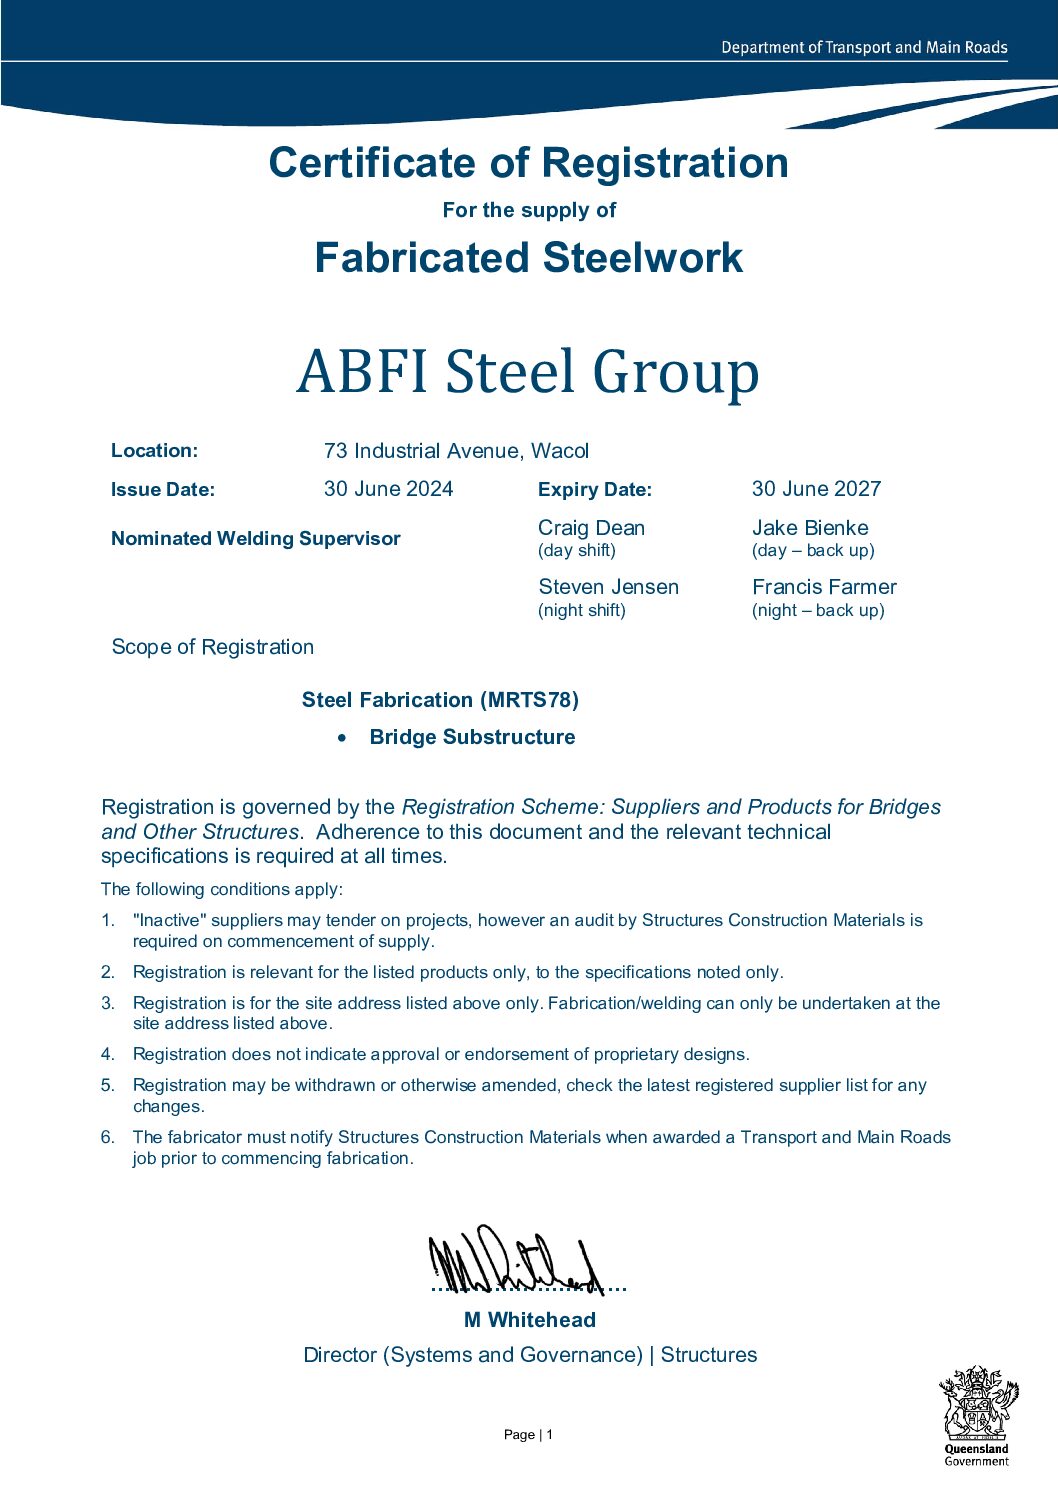 ABFI Steel - Minor Certificate til Jun 2027